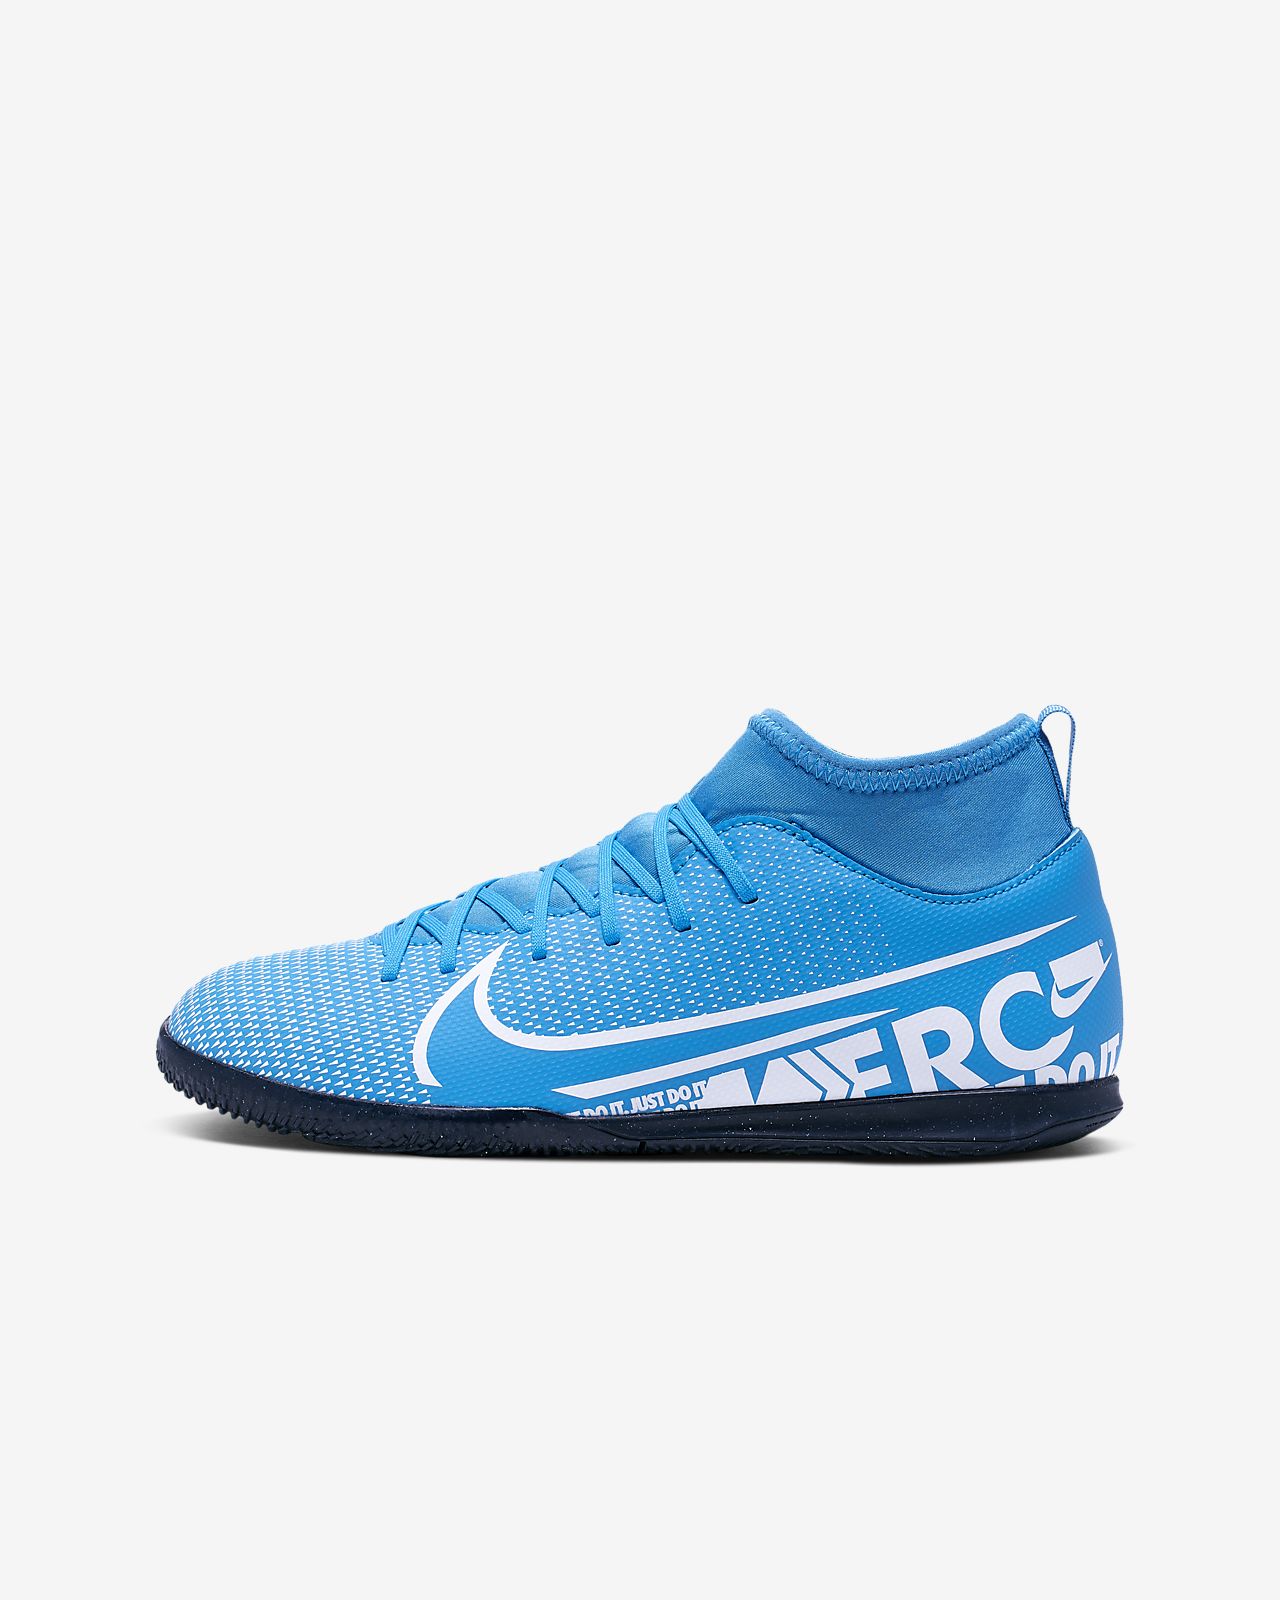 Nike Mercurial Superfly Blue Lagoon football boots Nike